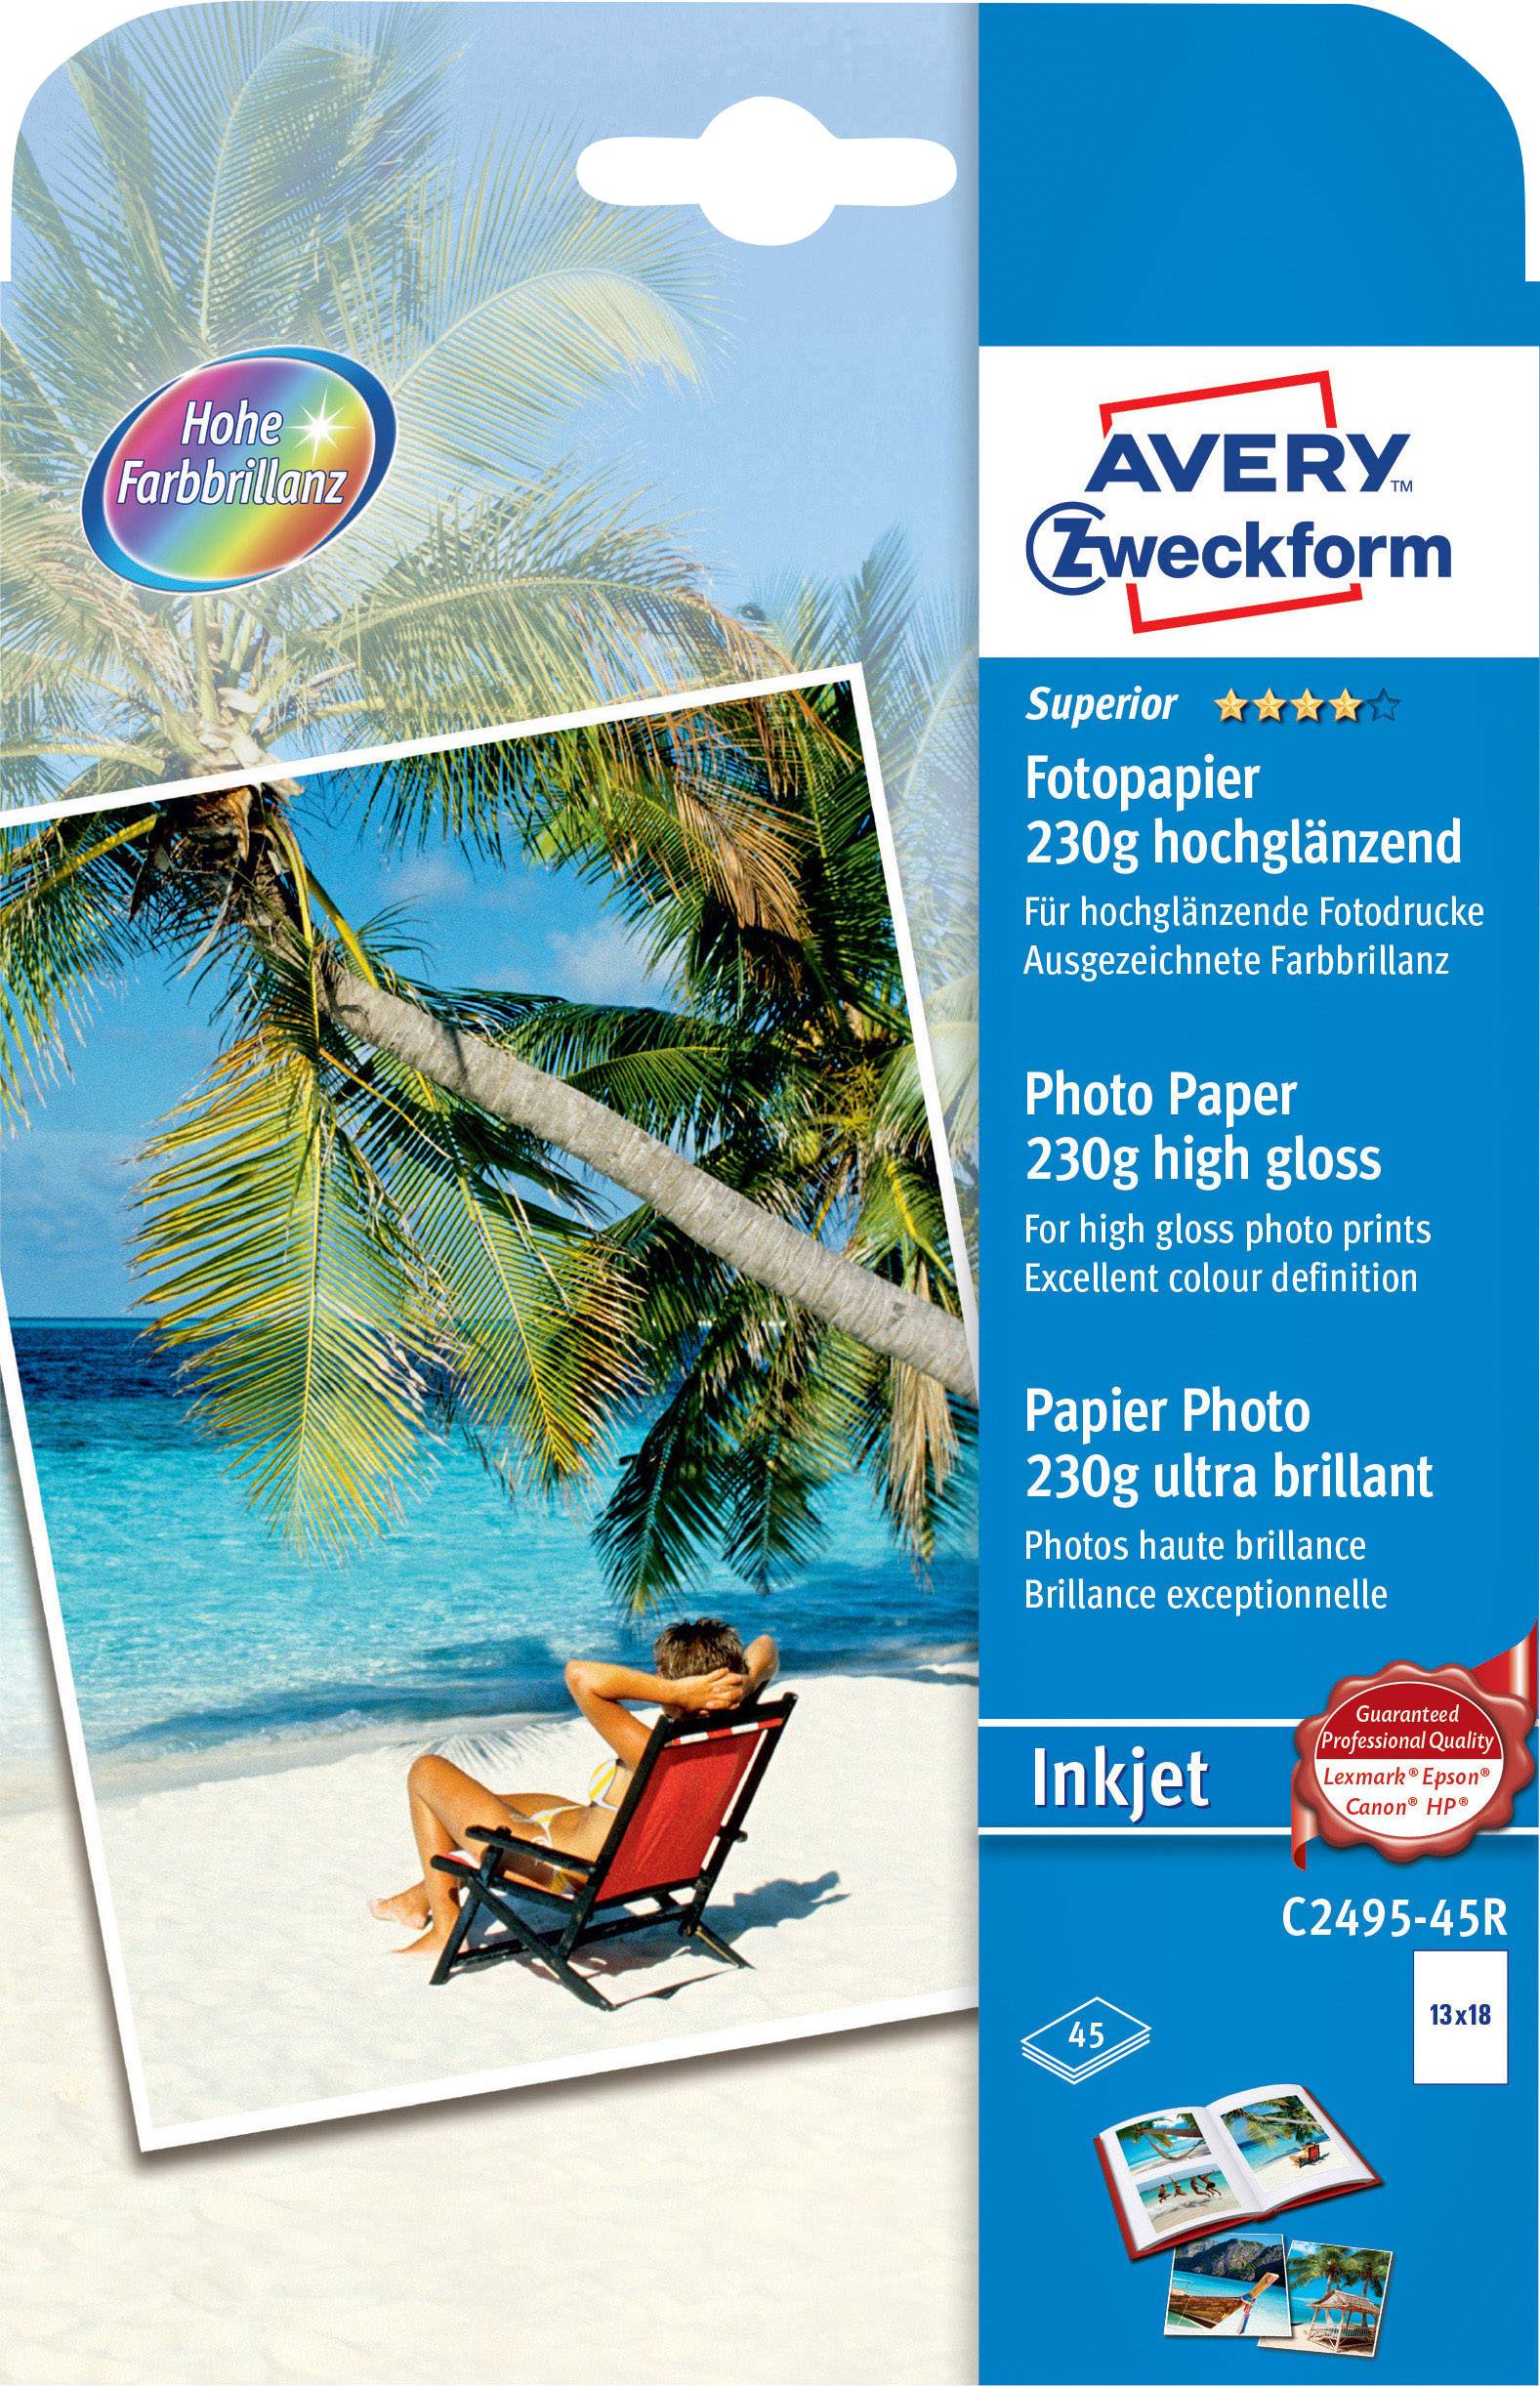 ZWECKFORM Fotopapier Avery-Zweckform Superior Photo Paper Inkjet C2495-45R 13 x 18 cm 230 g/m² 45 Bl